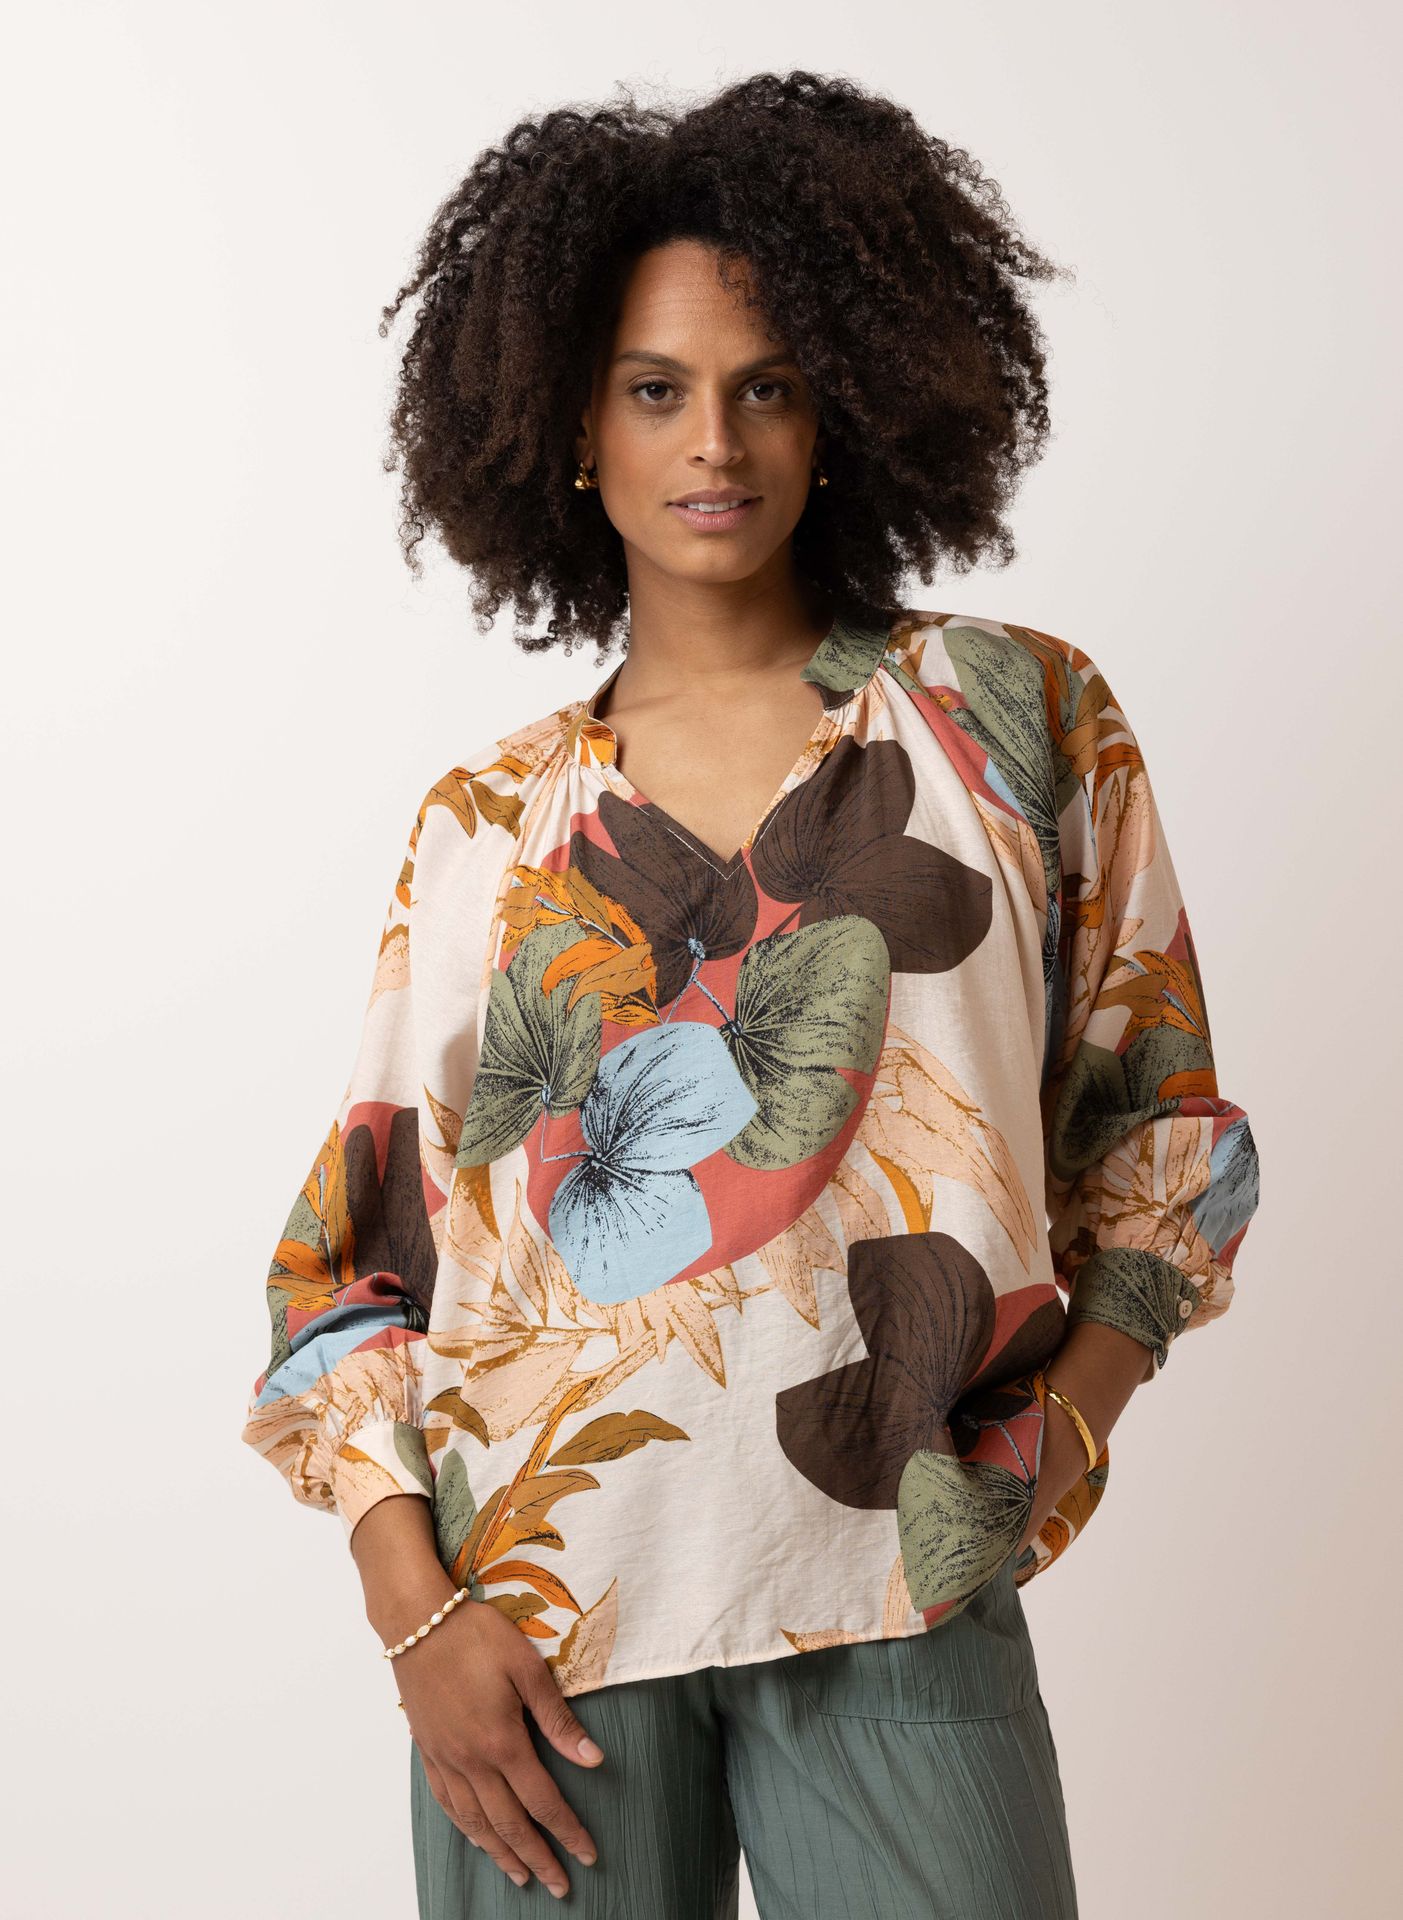 Norah Meerkleurige blouse sand multicolor 214431-121